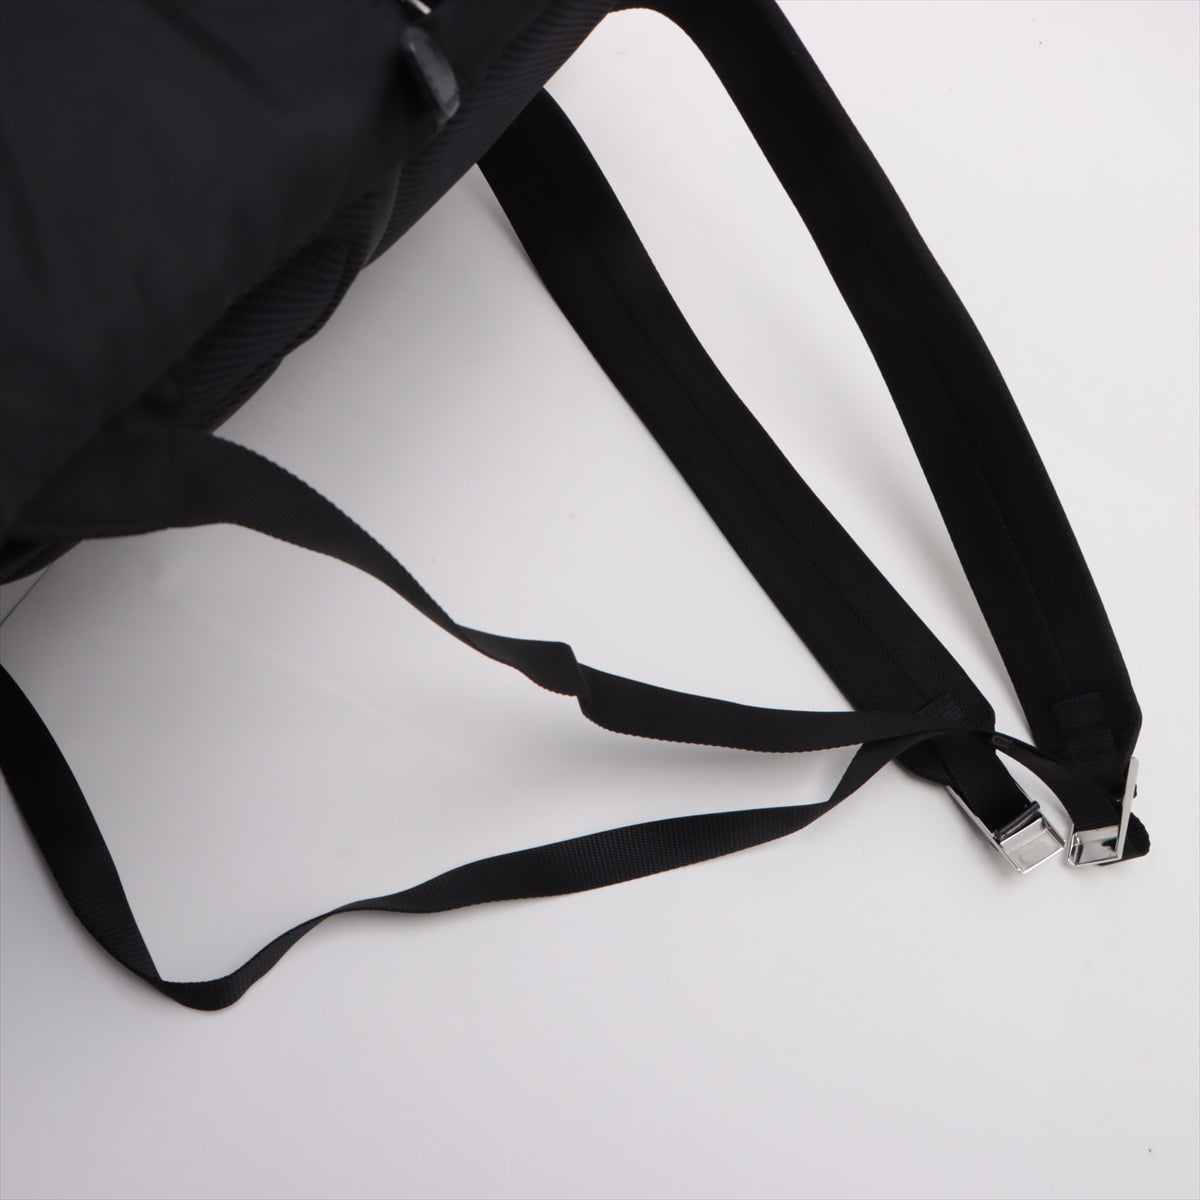 Prada  Backpack/Rack Black